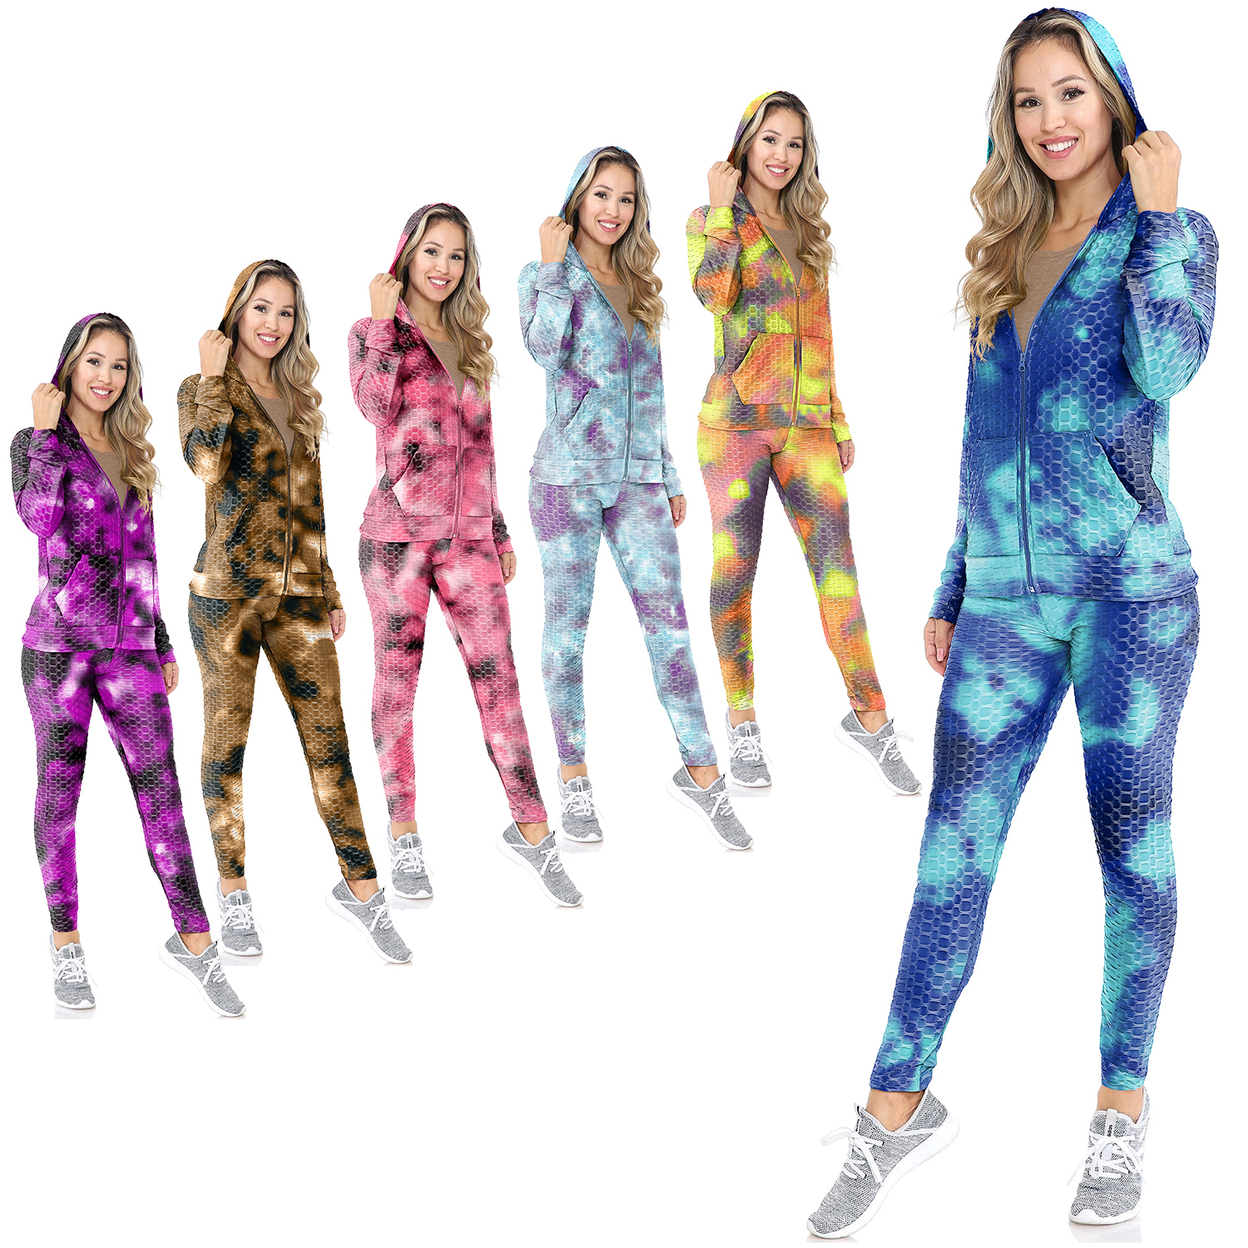 2-Set: Women's Athletic Anti-Cellulite Textured Tie Dye Body Contour Yoga Track Suit W/ Hood - X-large, Tie Dye